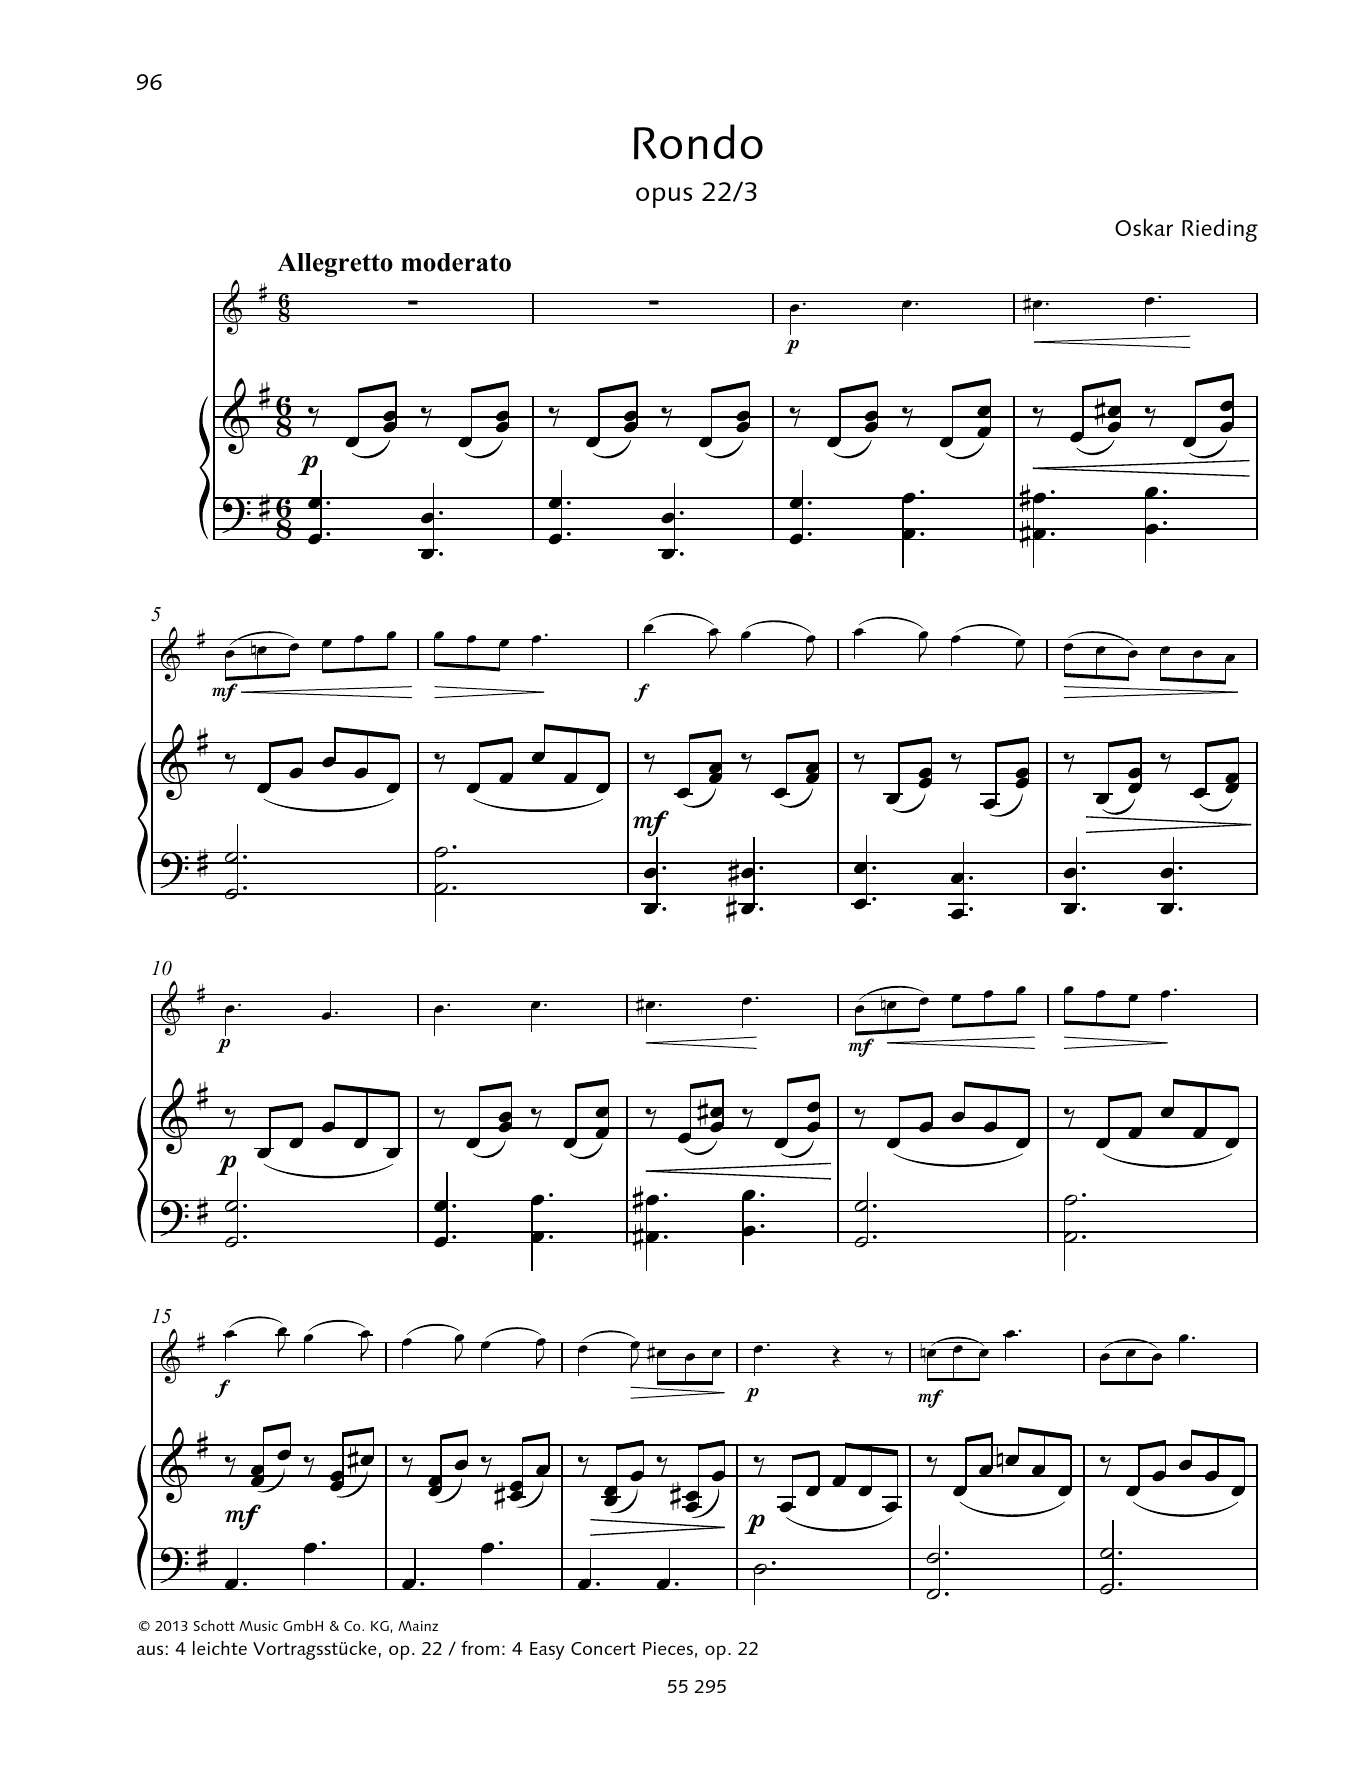 Oskar Rieding Rondo Sheet Music Notes & Chords for String Solo - Download or Print PDF